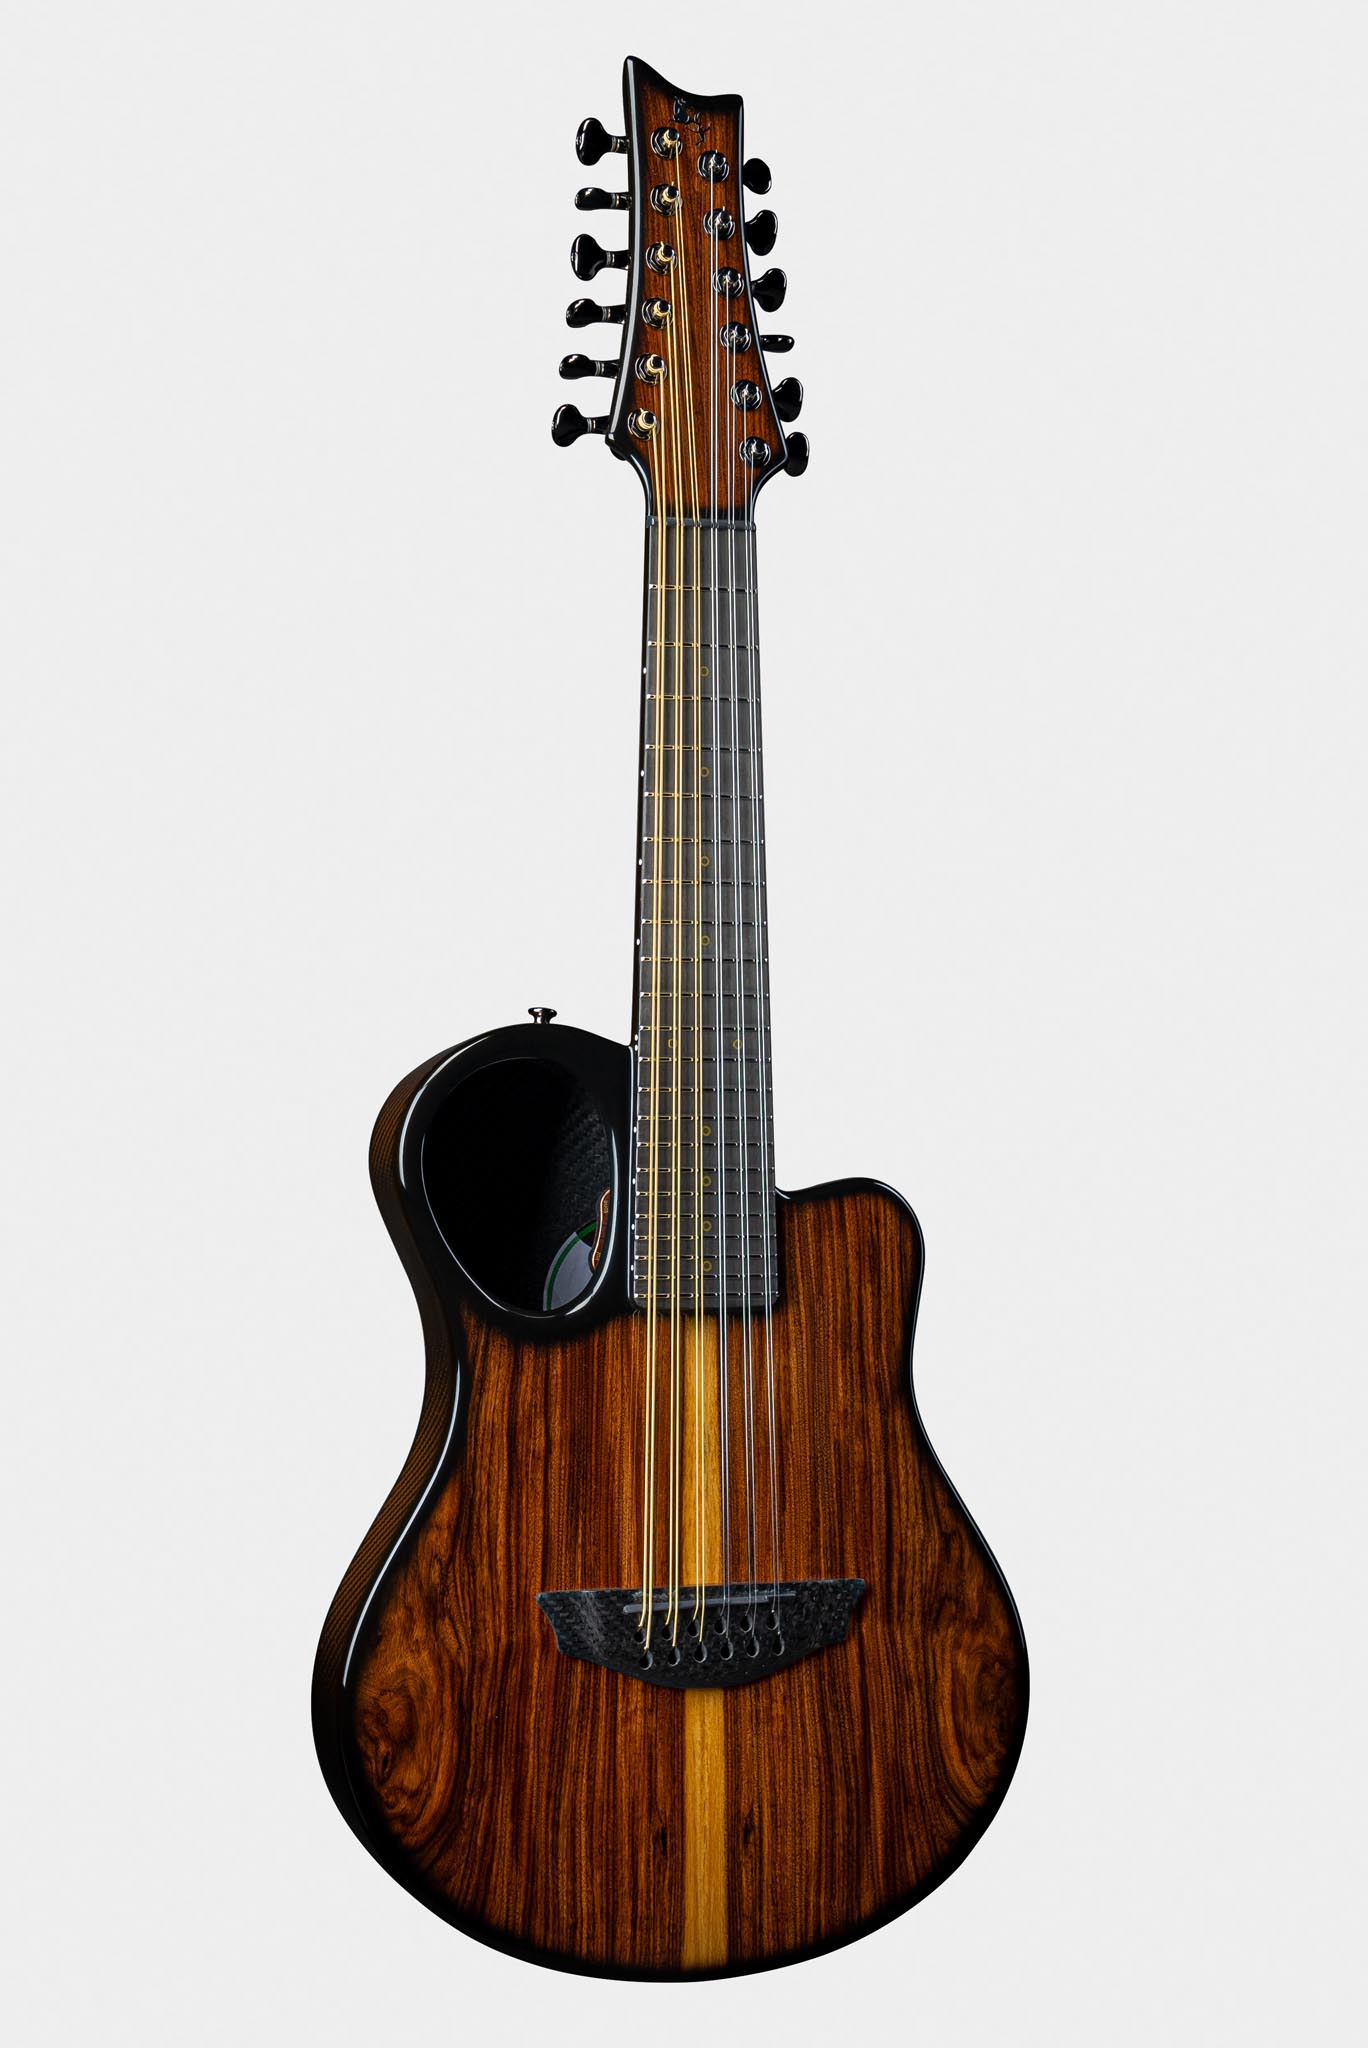 Emerald Guitars Amicus model with elegant Pau Ferro wood finish and carbon fiber body